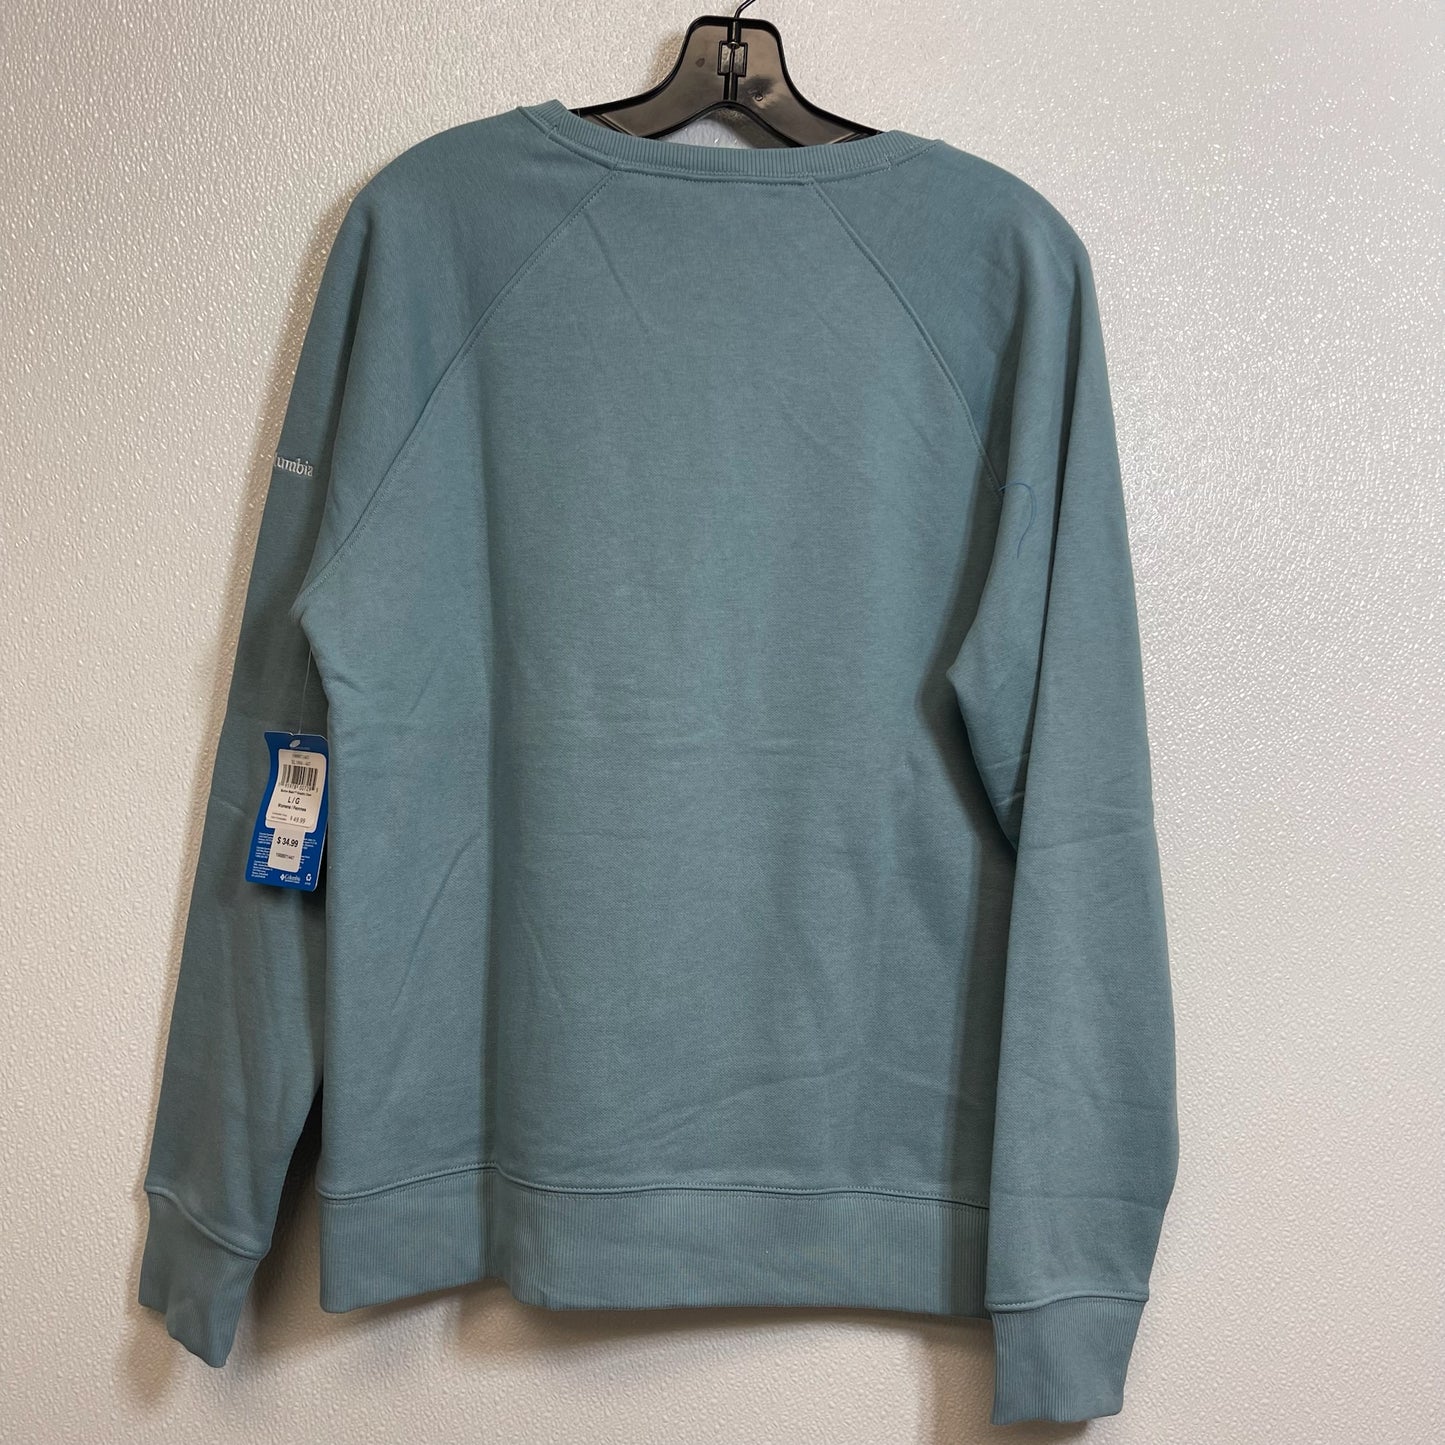 Sweatshirt Crewneck By Columbia  Size: L